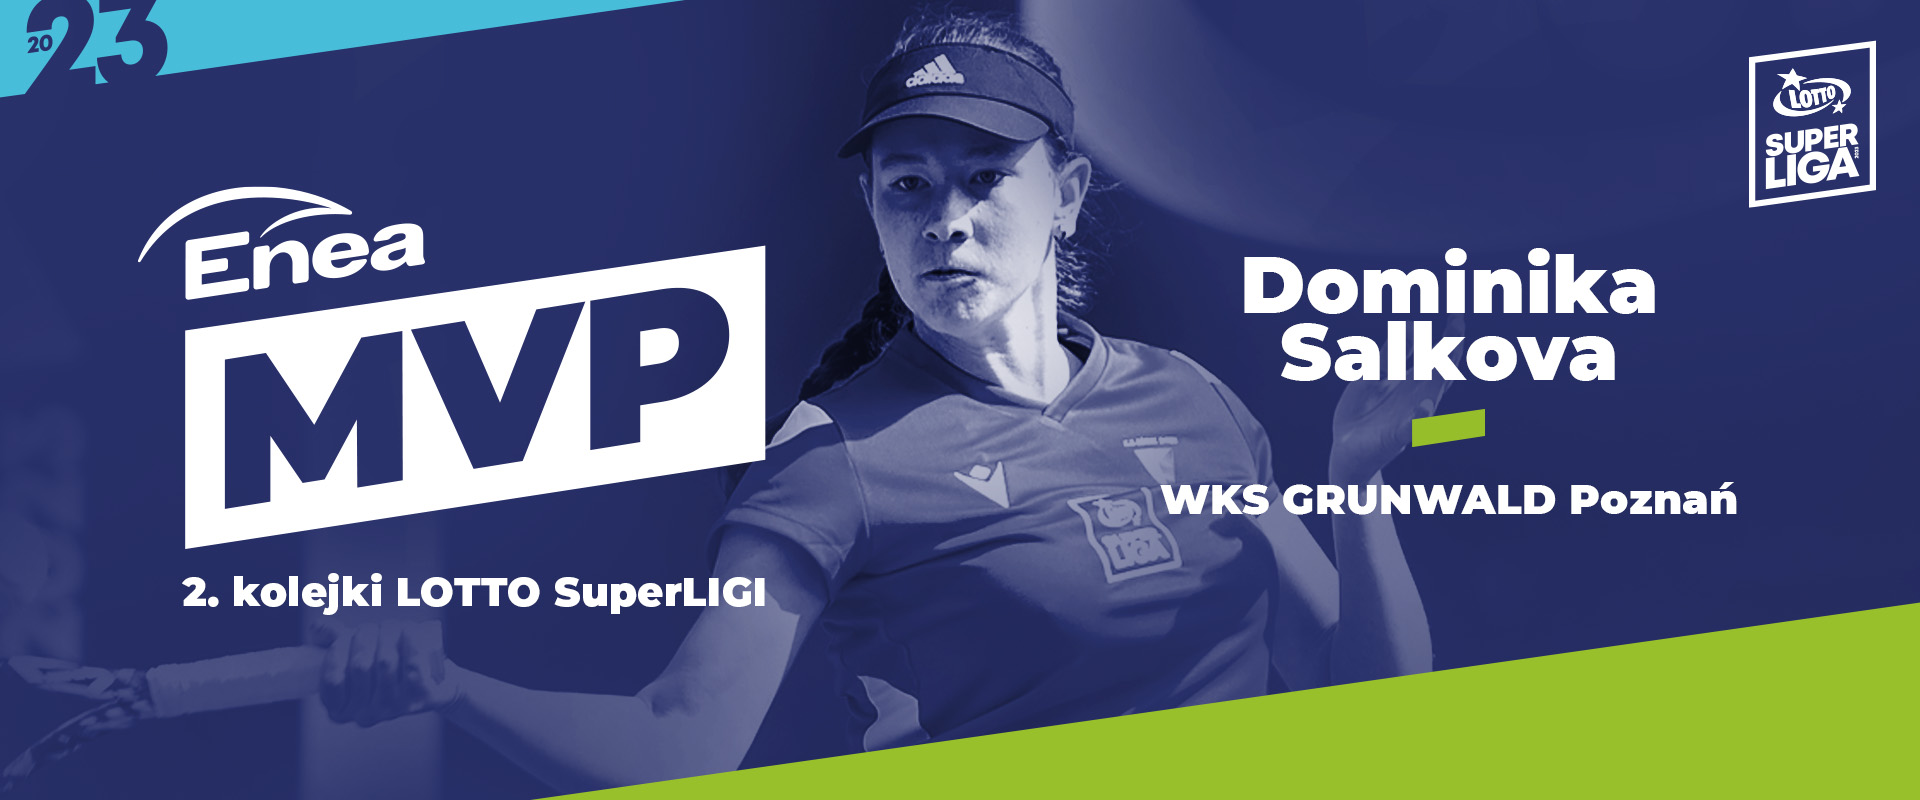 Dominika Salkova - Enea MVP 2. kolejki